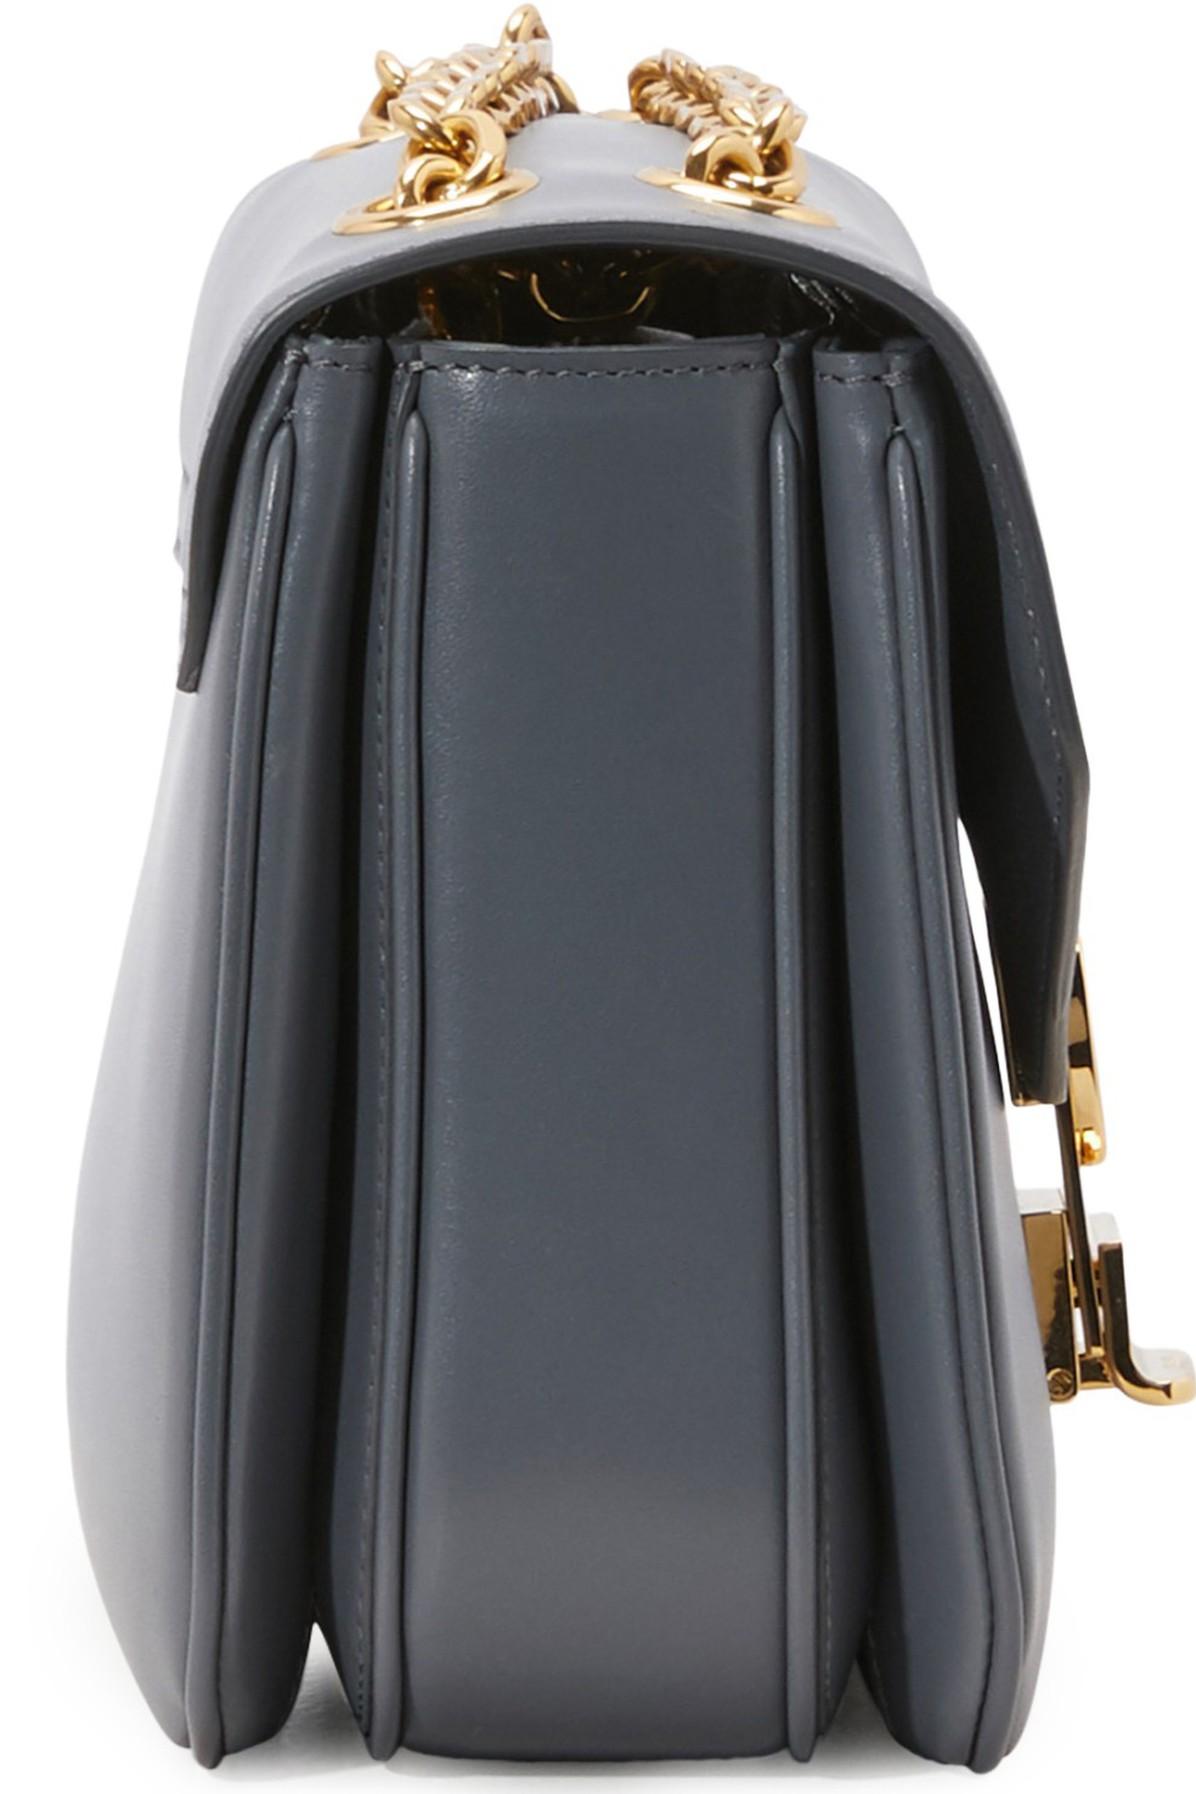 Celine Leather C Medium Model Bag In Shiny Calfskin in Gray - Lyst